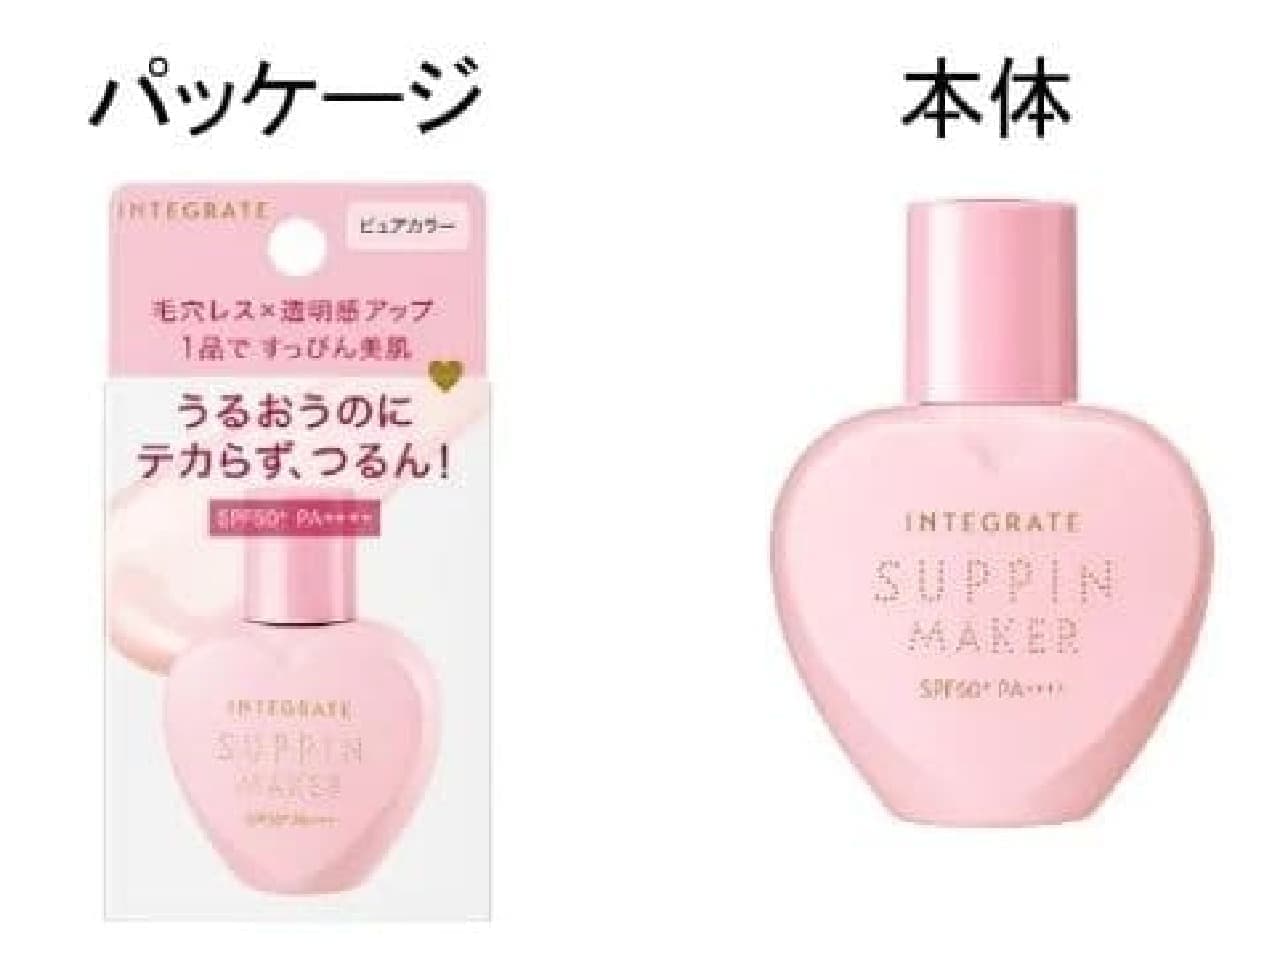 Shiseido Integrate "Suppin Maker Tone Up UV